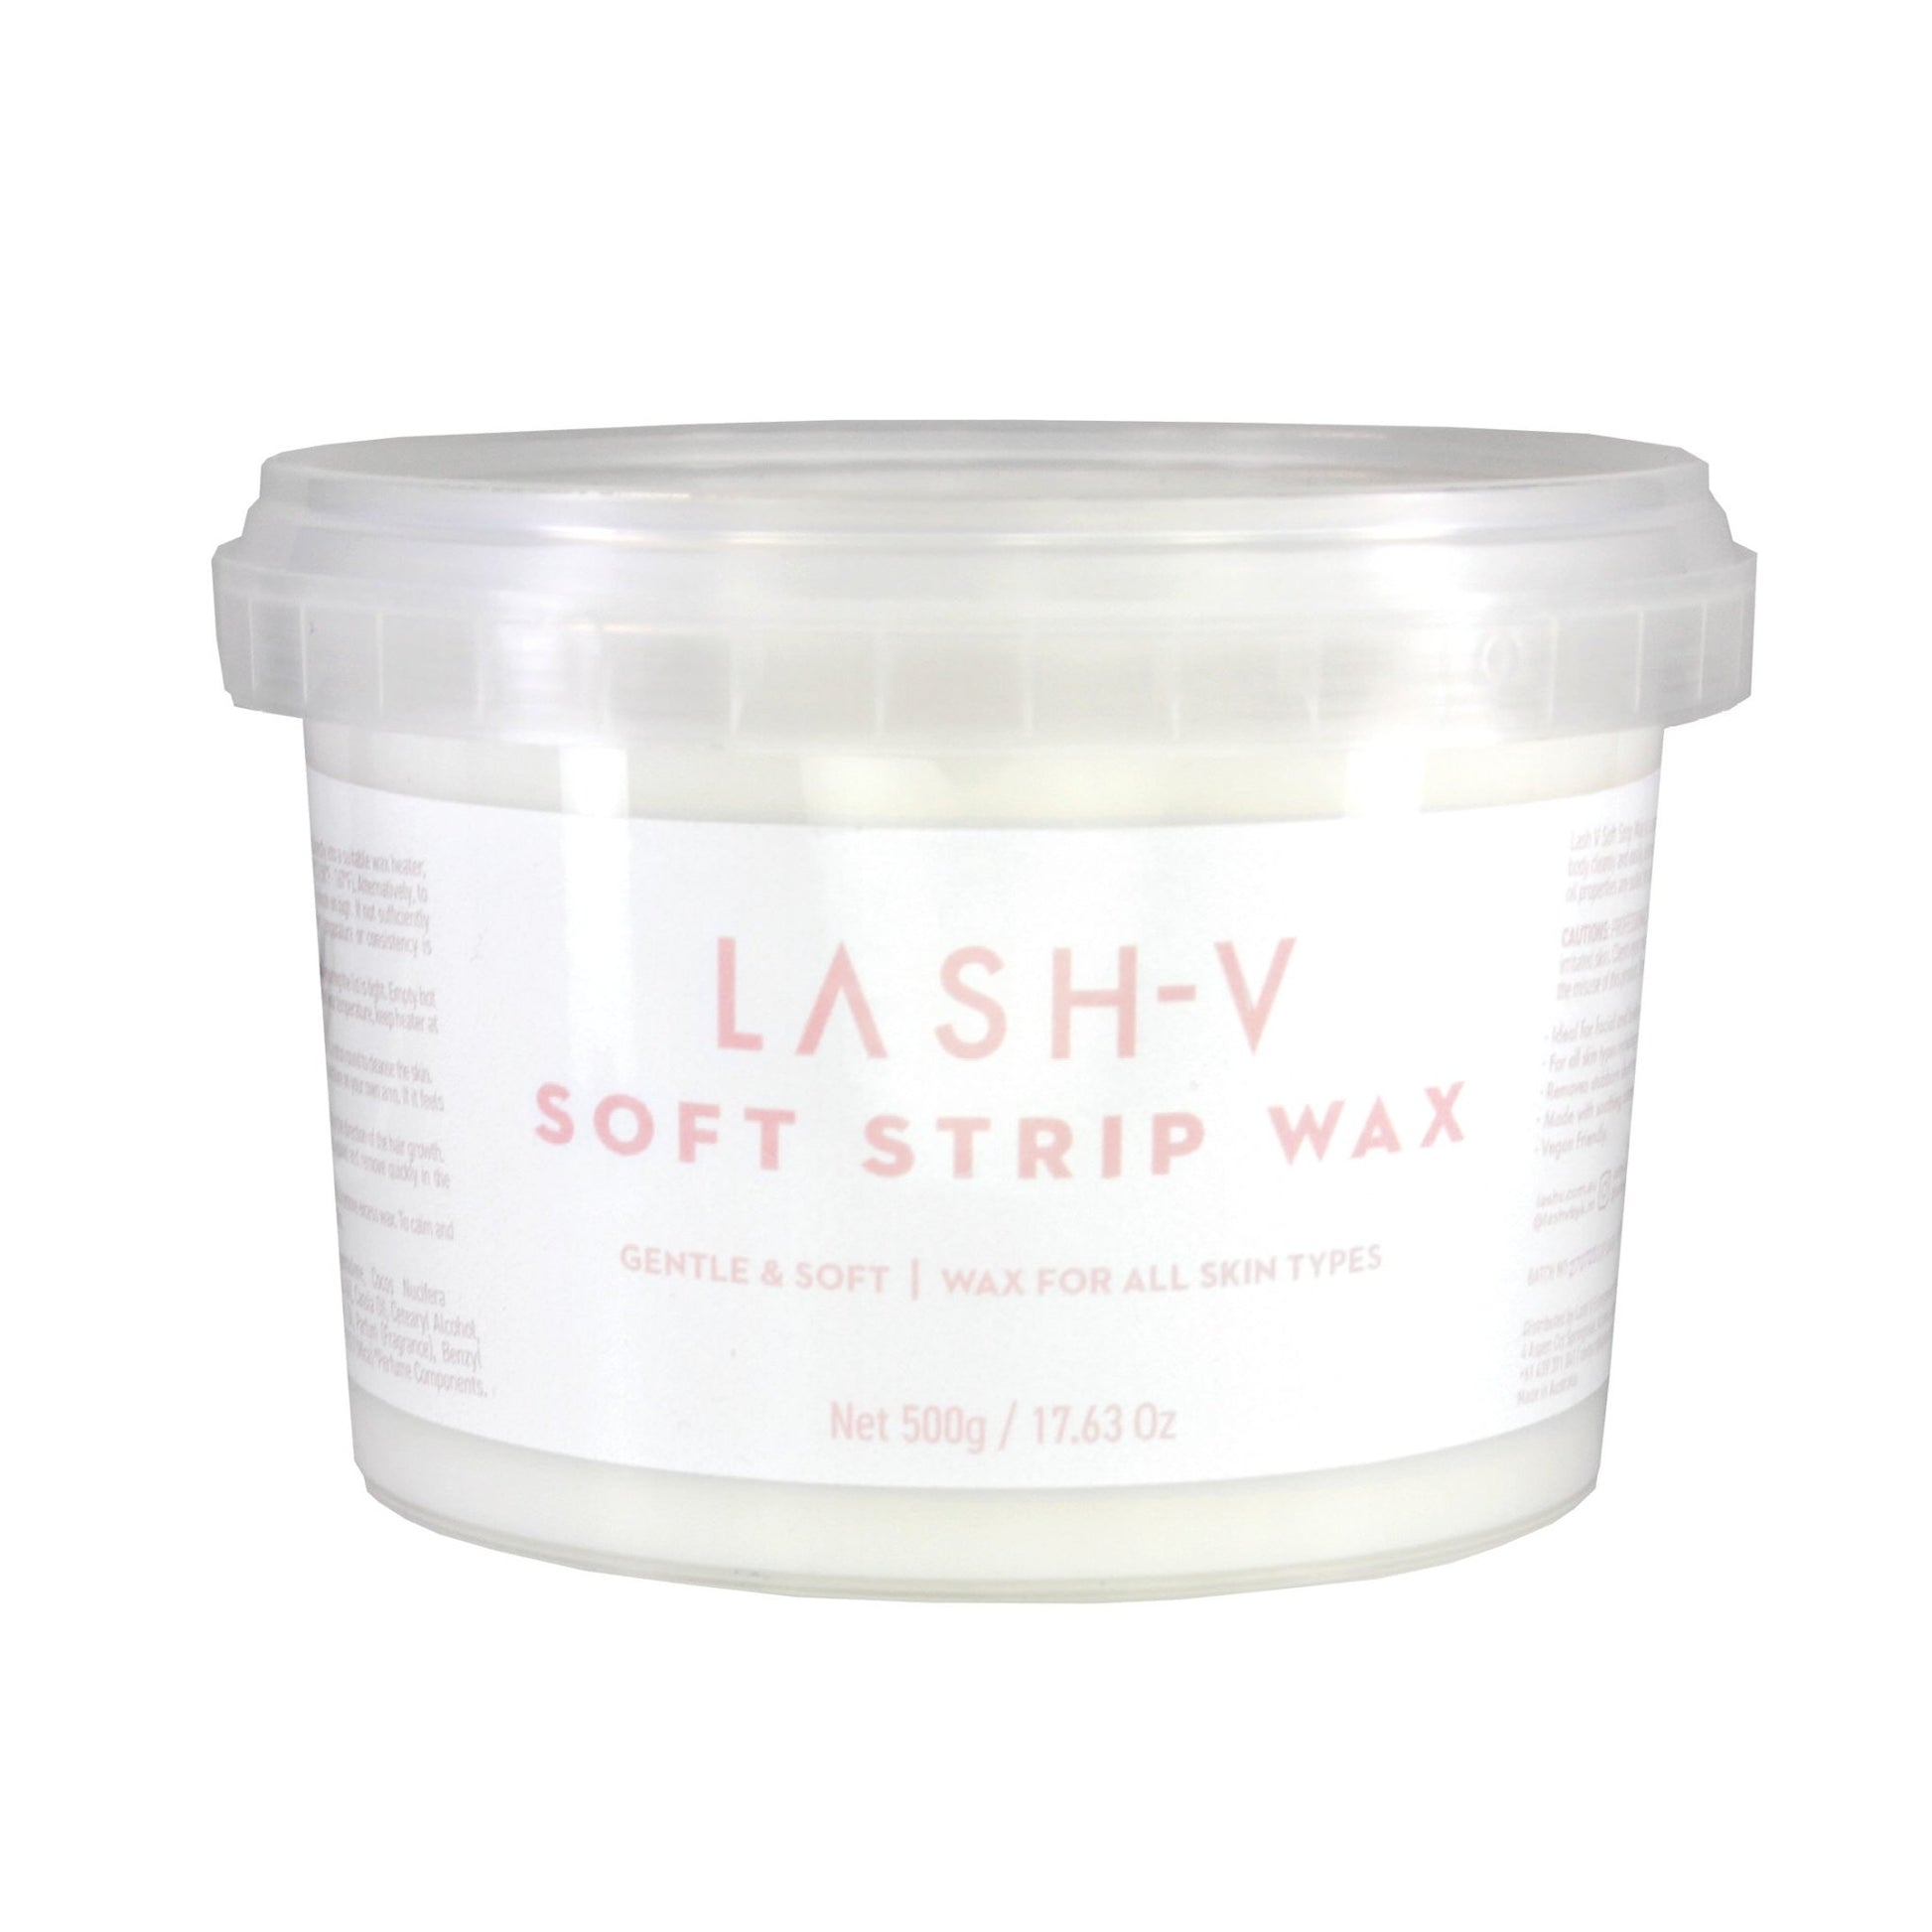 Soft Strip Wax - 500g - LASH V